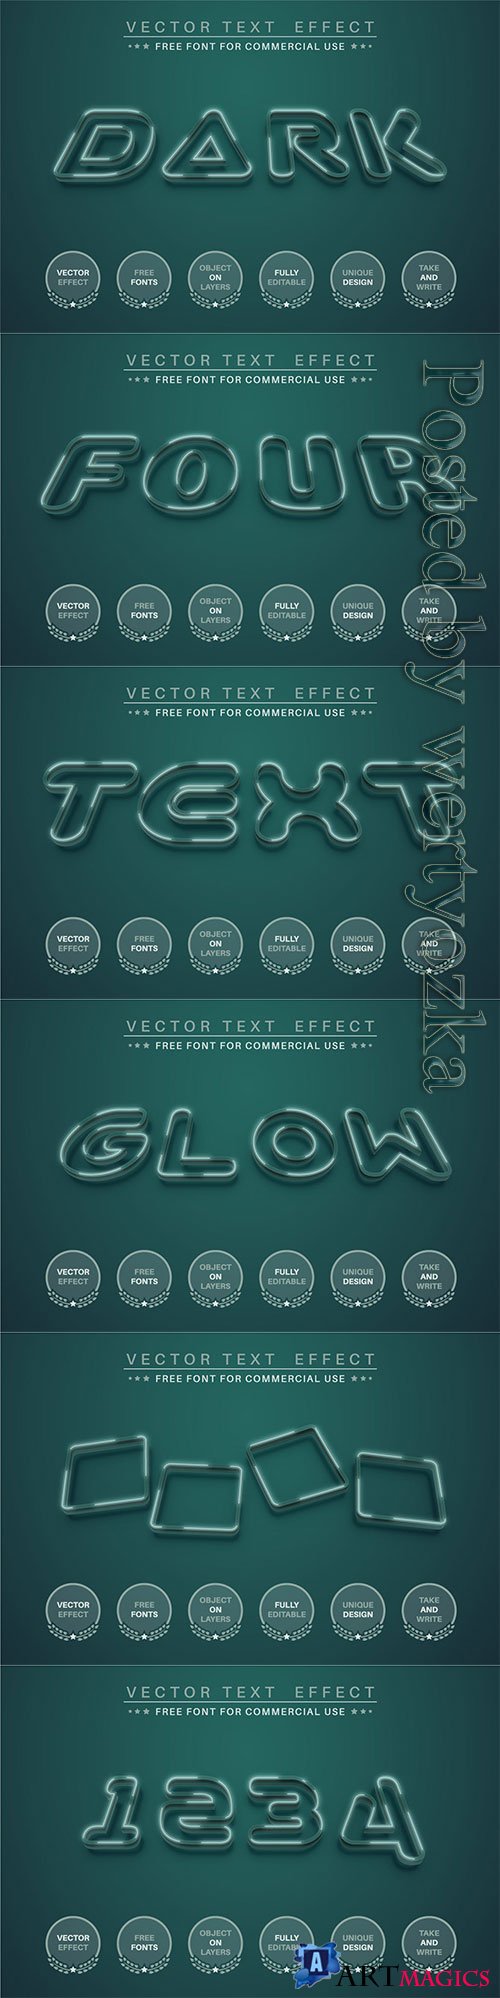 Dark green - editable text effect, font style